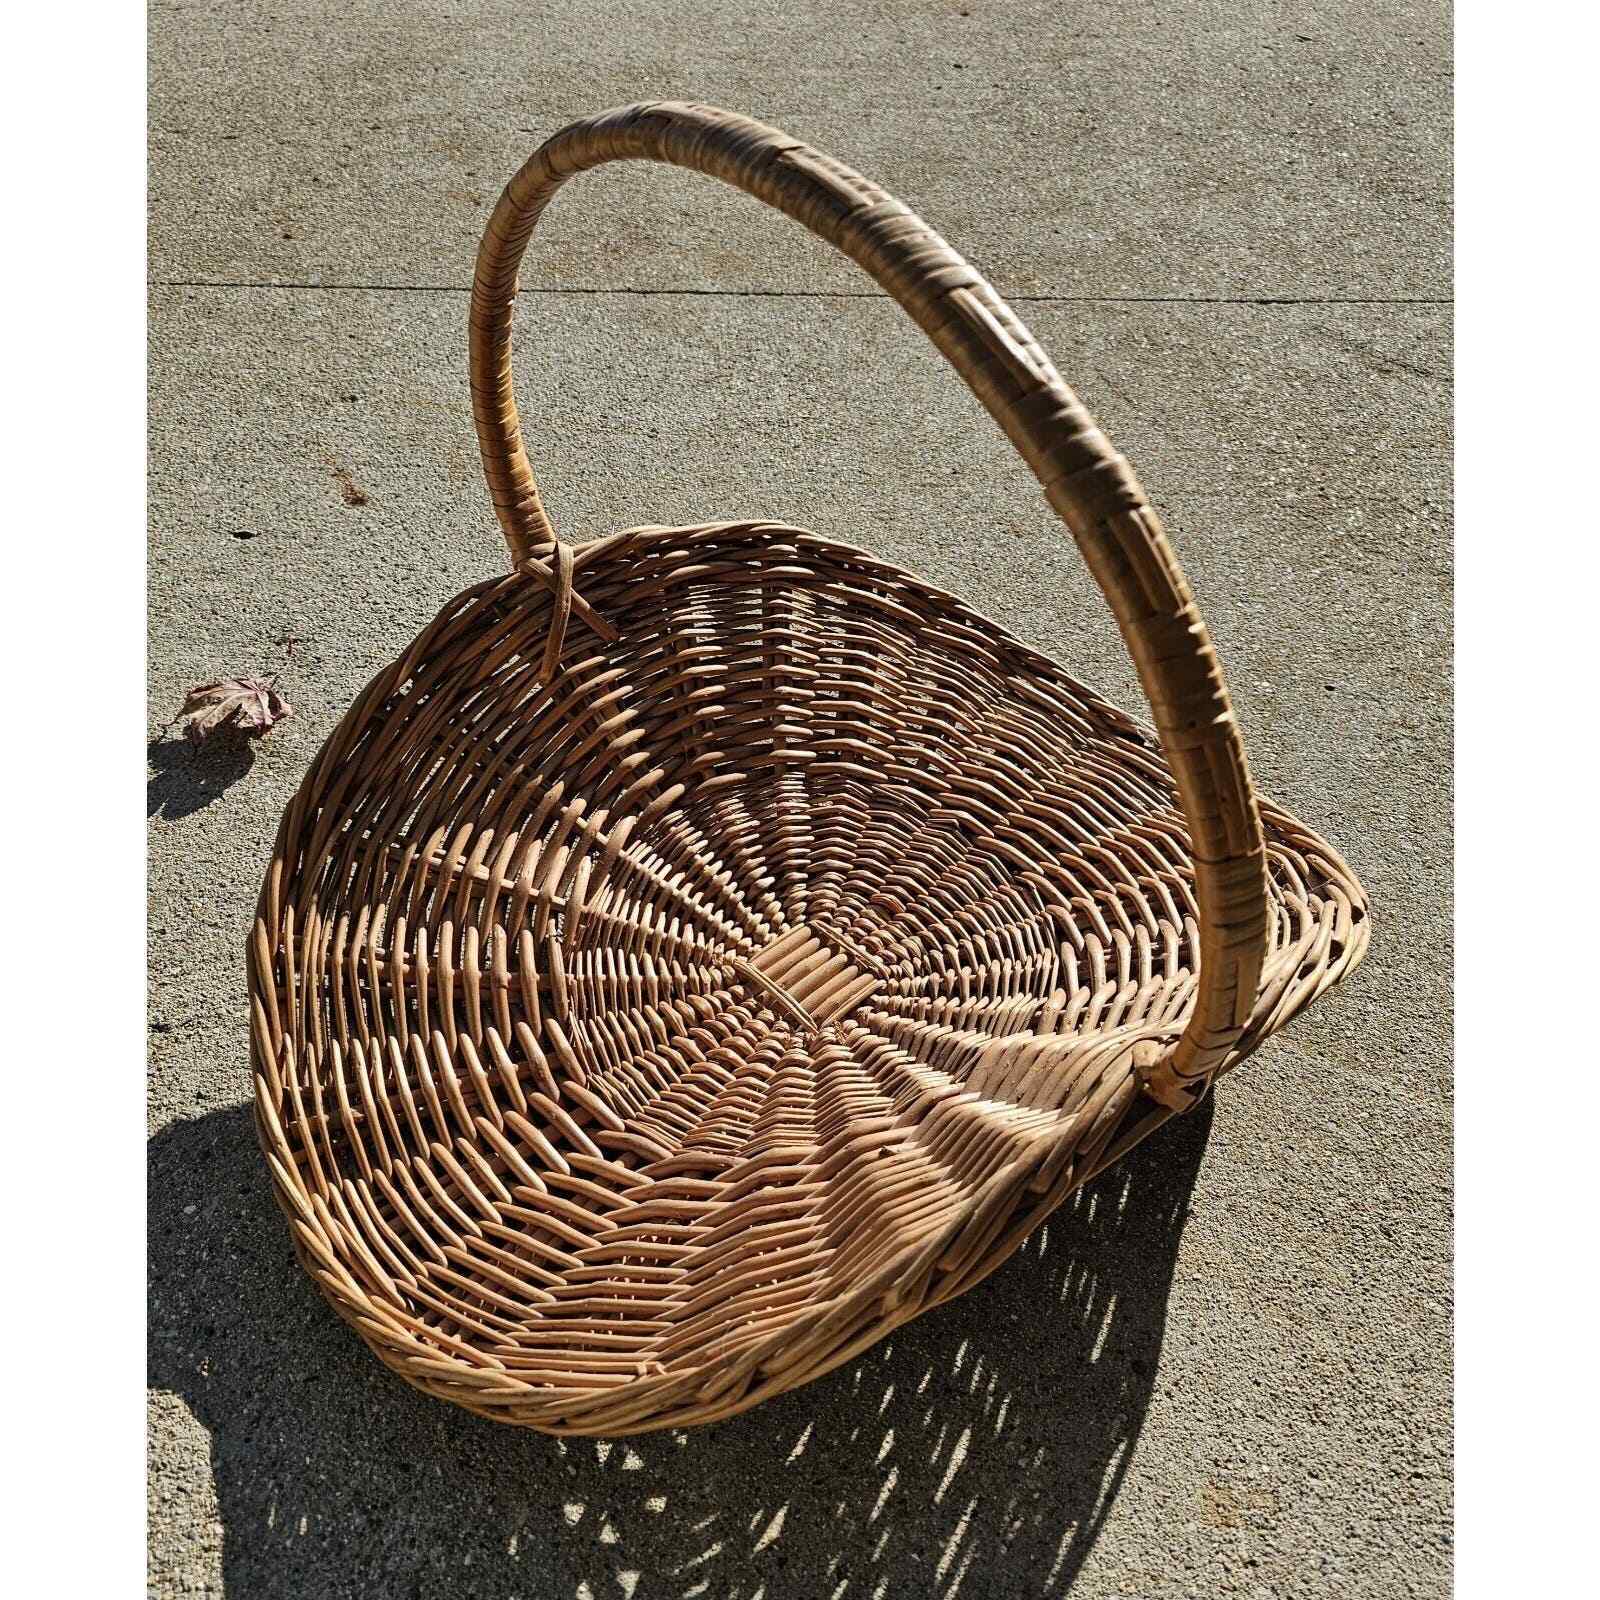 Large Wicker Woven Gathering Basket Herb Flower Round Handle 18.5”x 15.5”x 13.5”